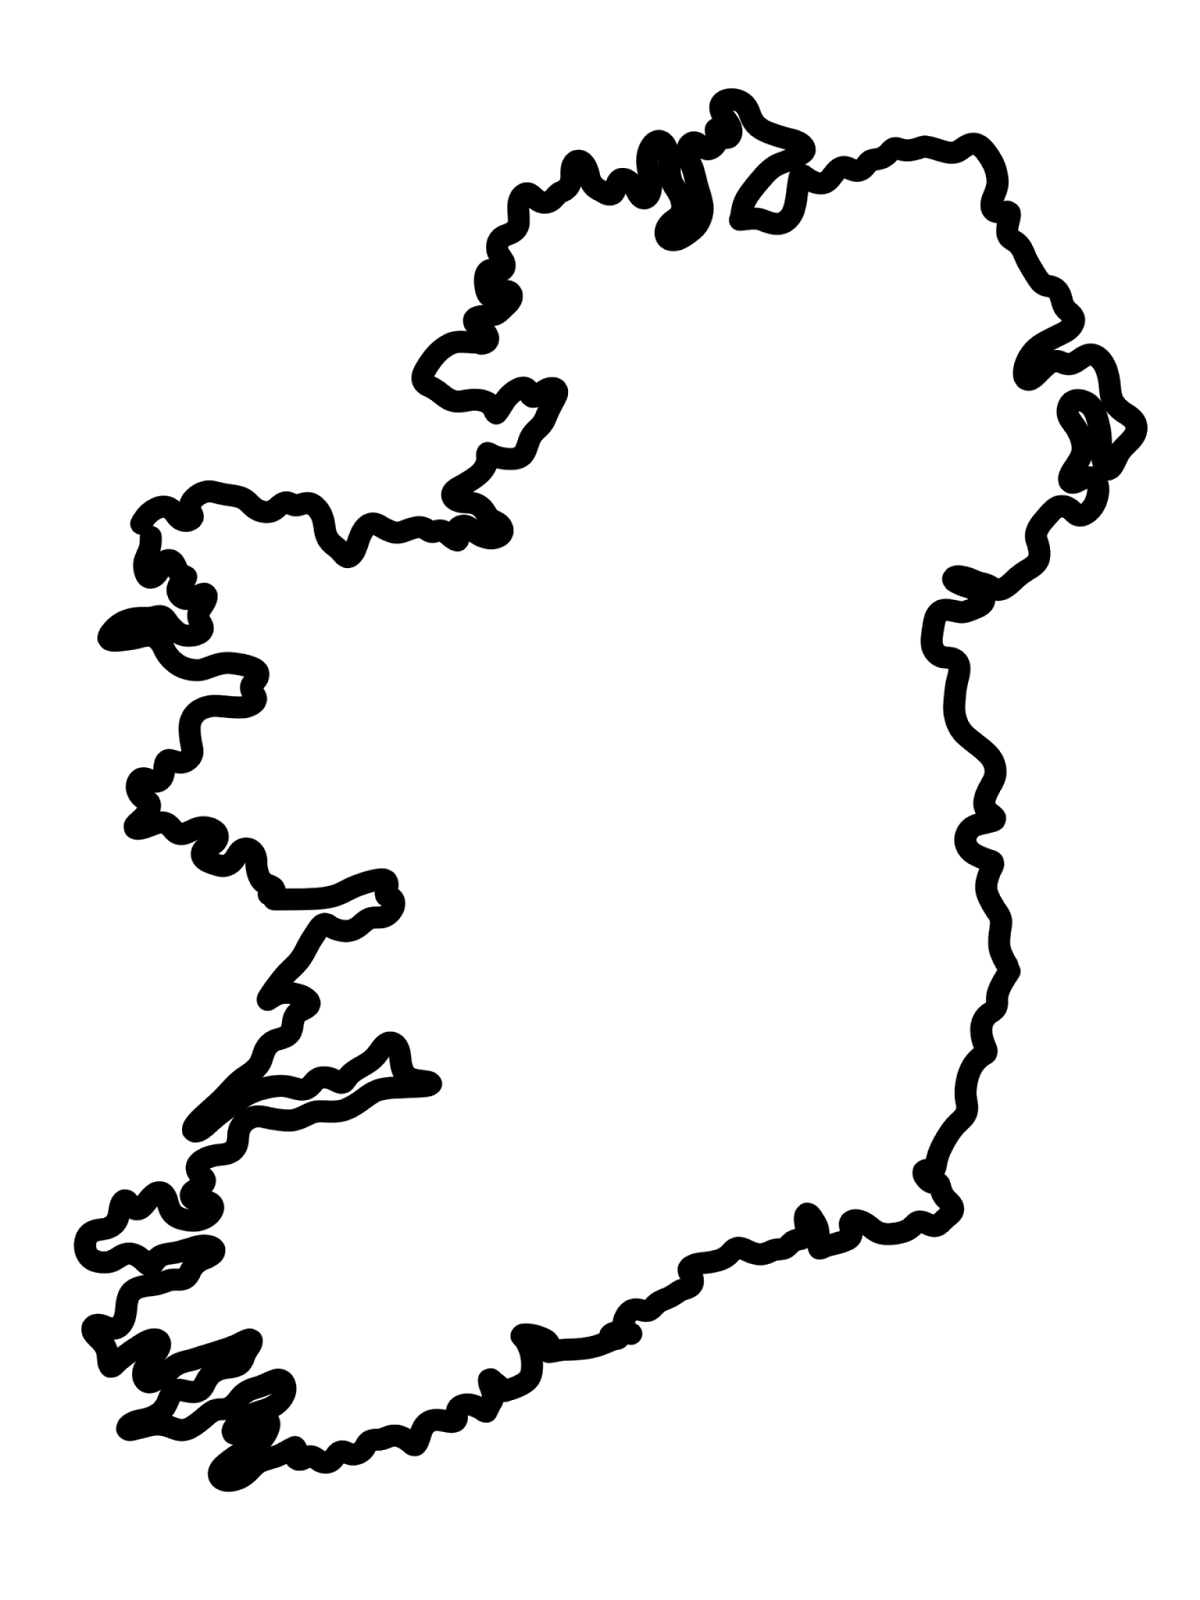 clipart map of ireland - photo #33